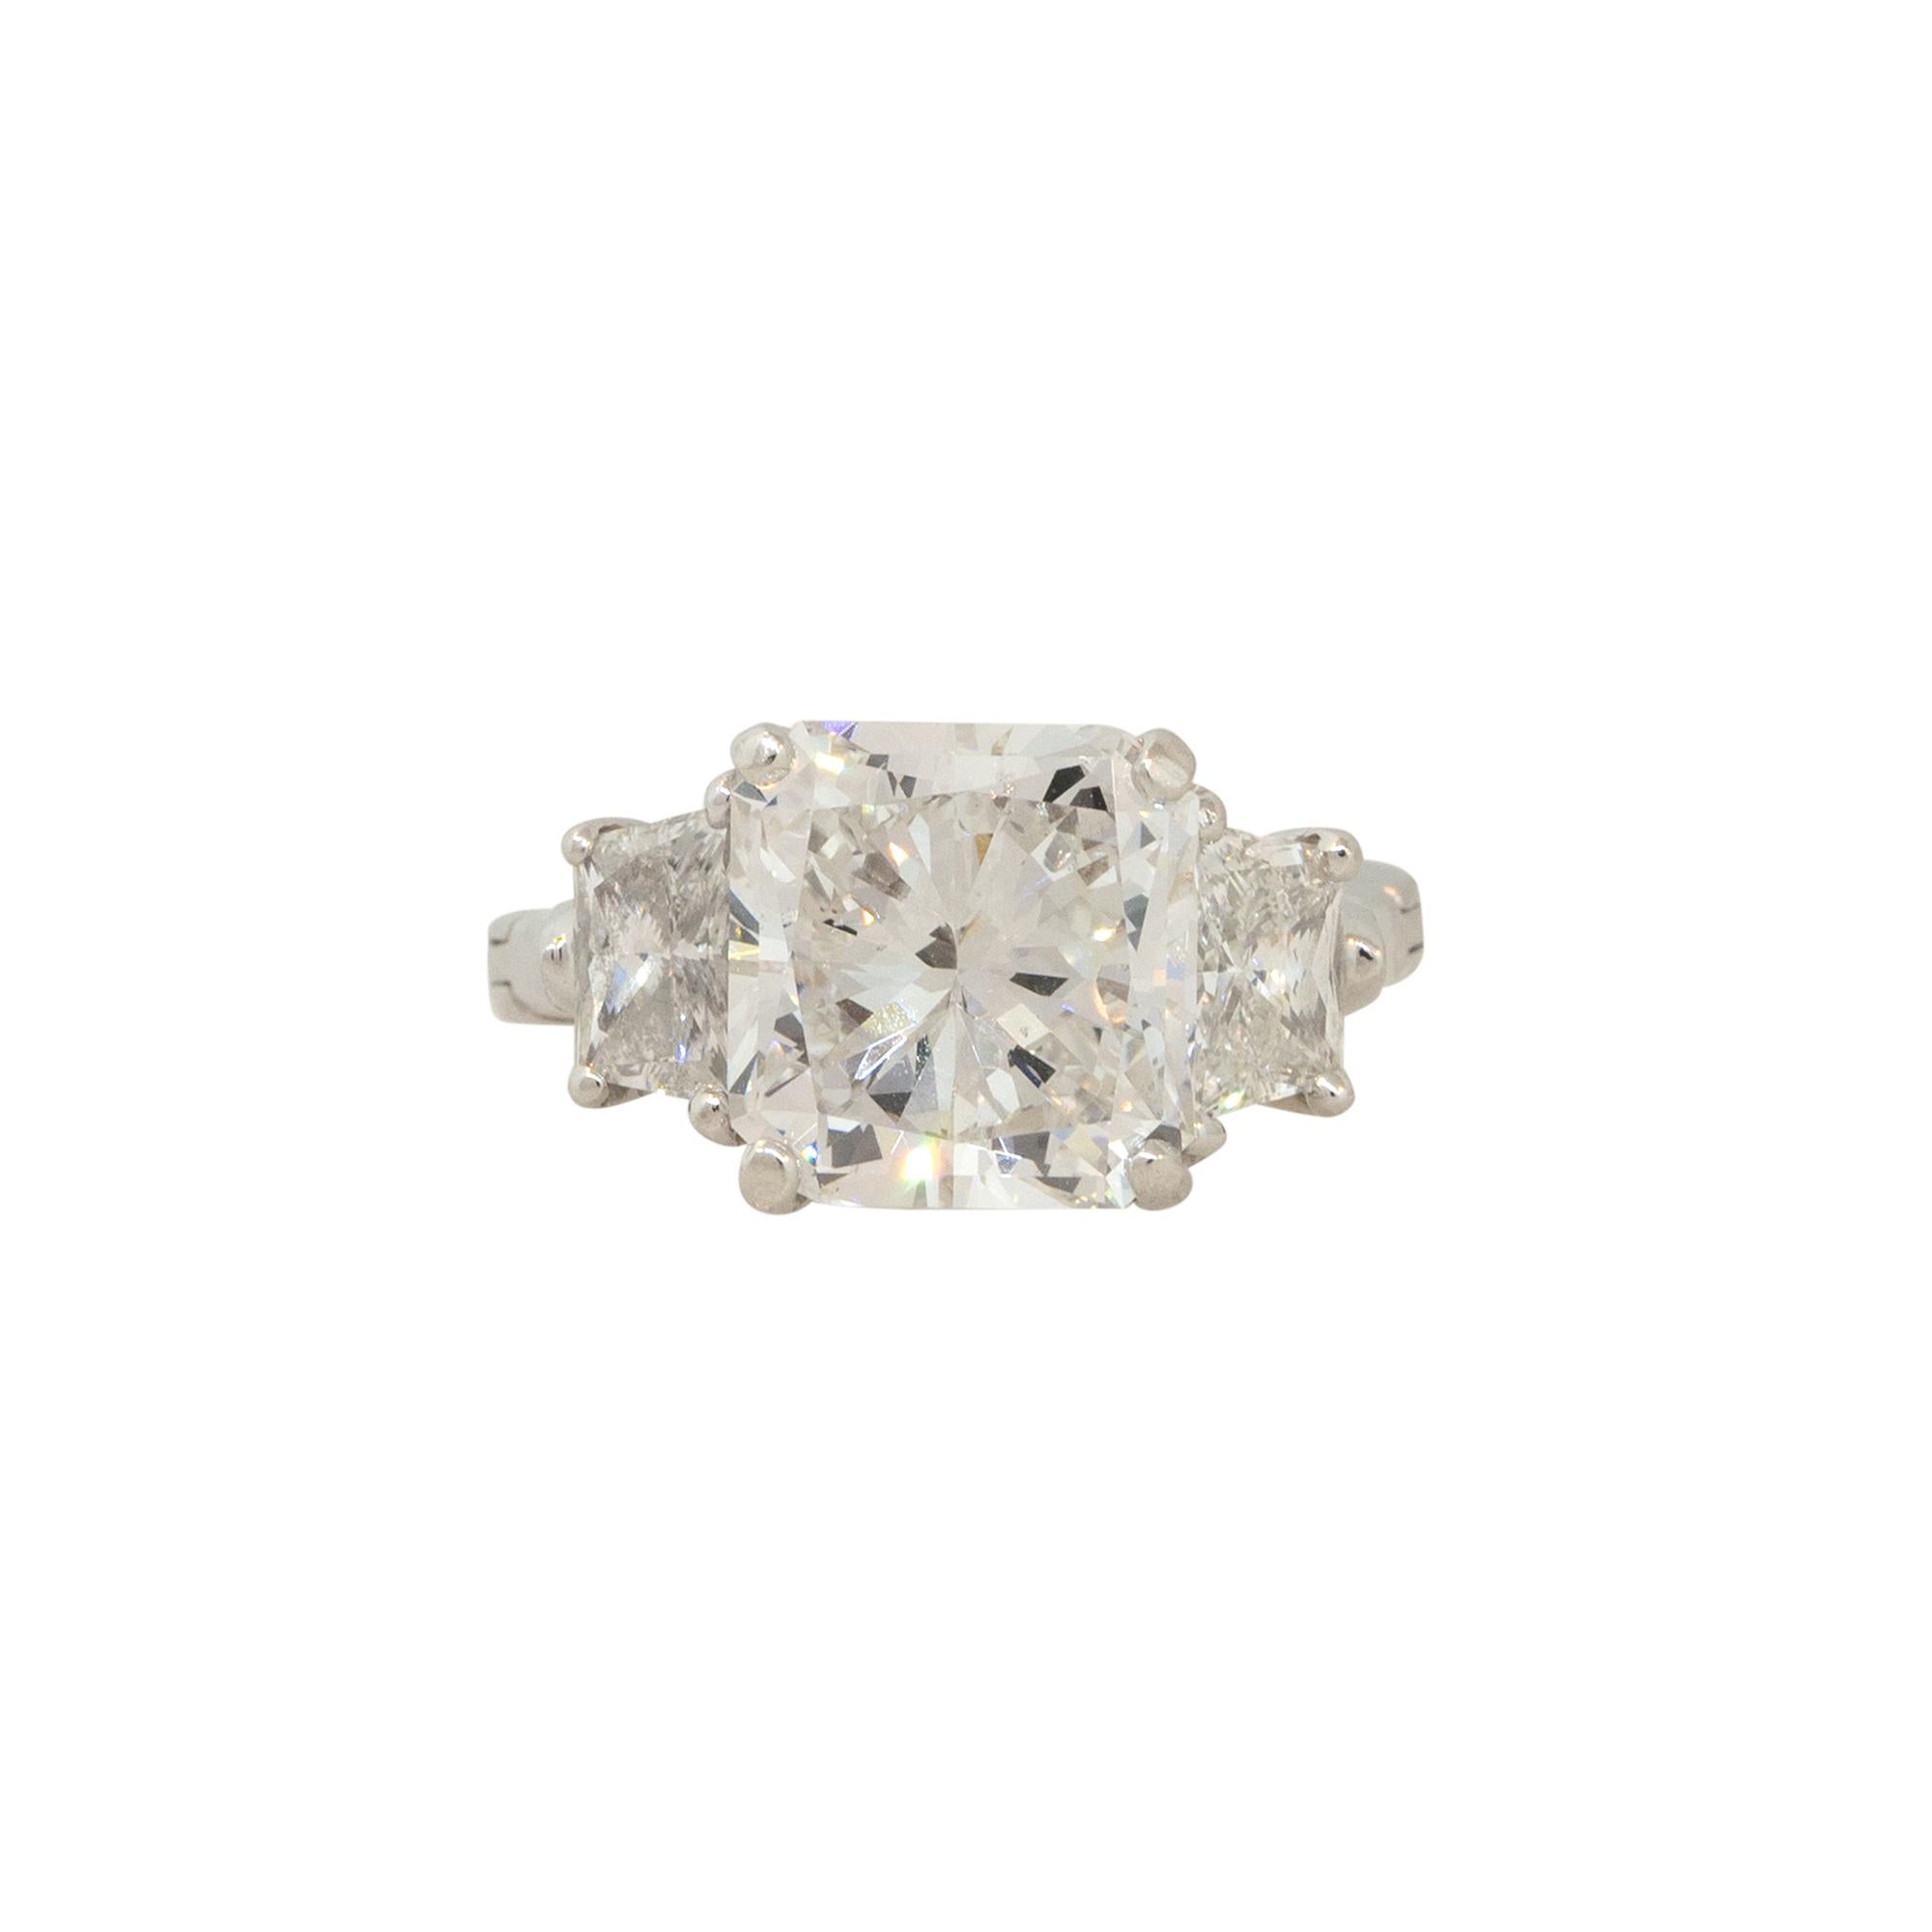 6.5 carat diamond ring